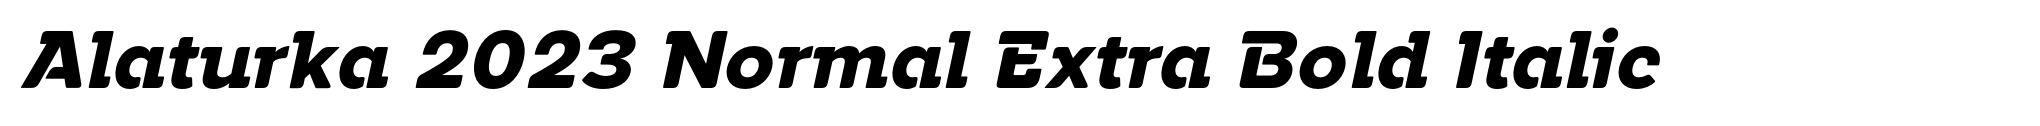 Alaturka 2023 Normal Extra Bold Italic image